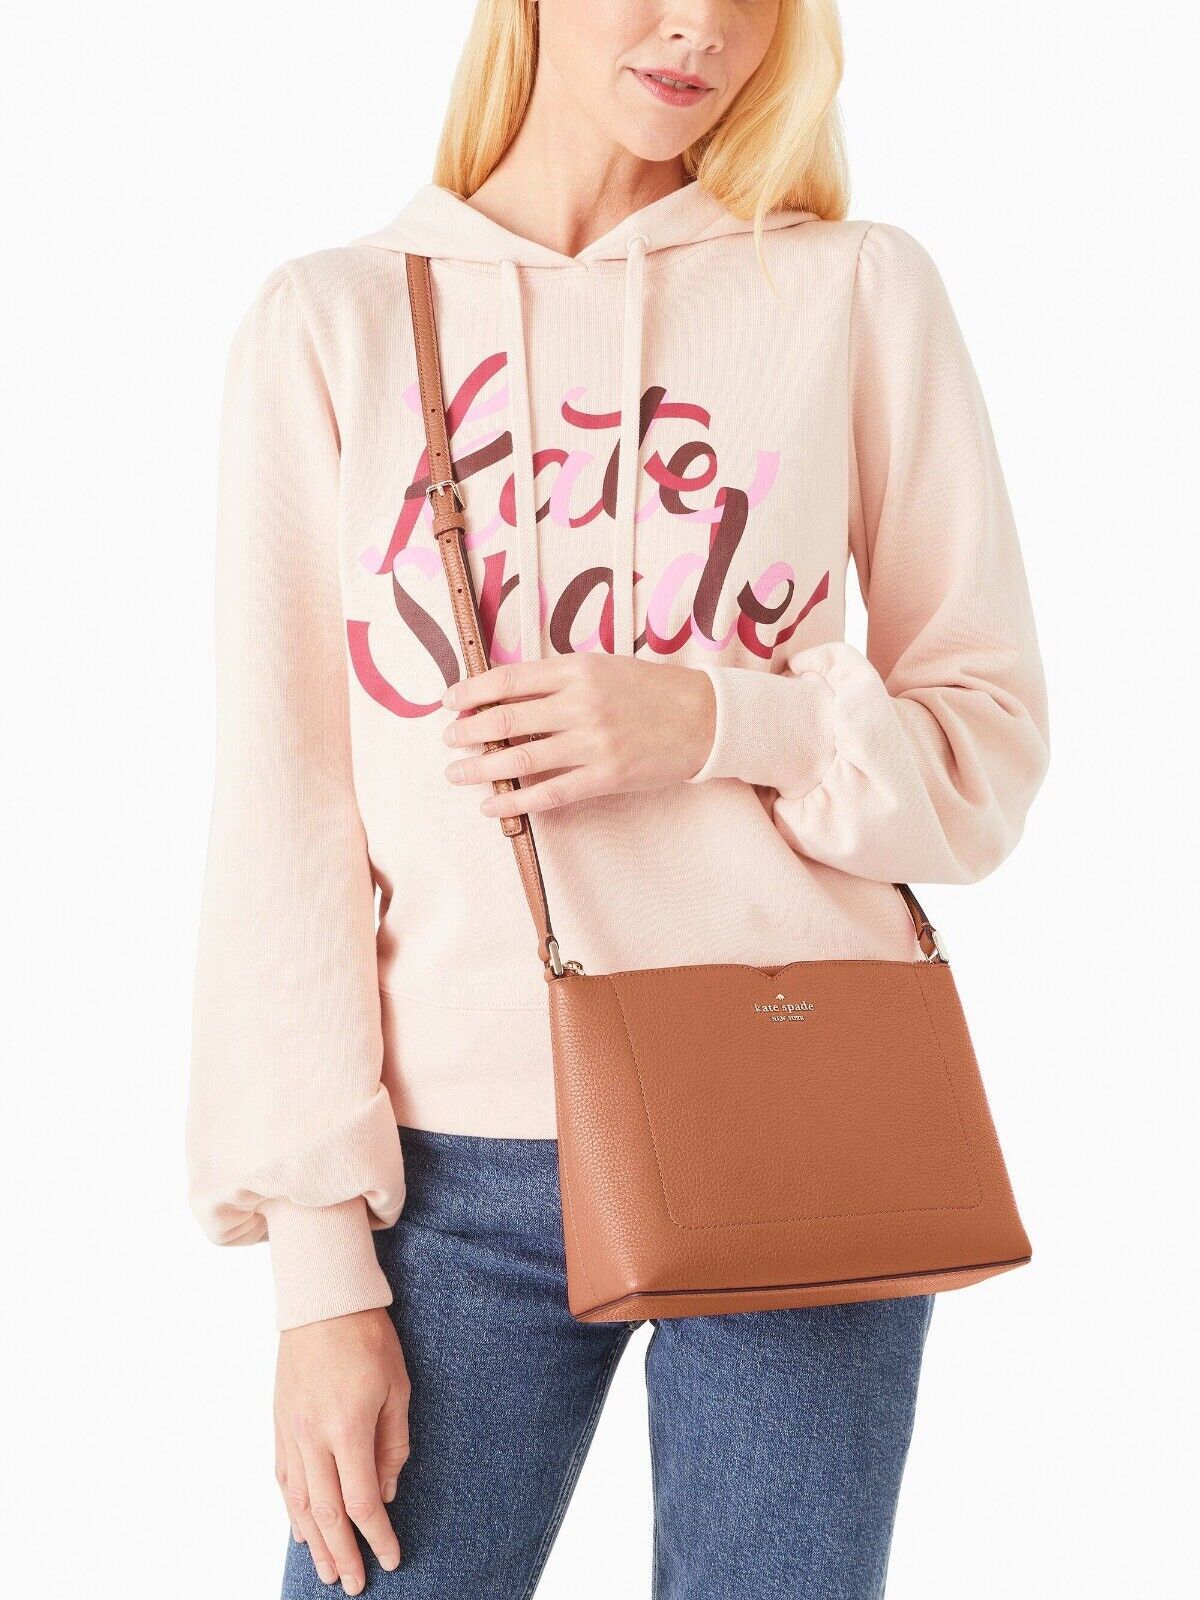 Kate Spade Rosie Small Crossbody Bag in Festive Pink wkr00630